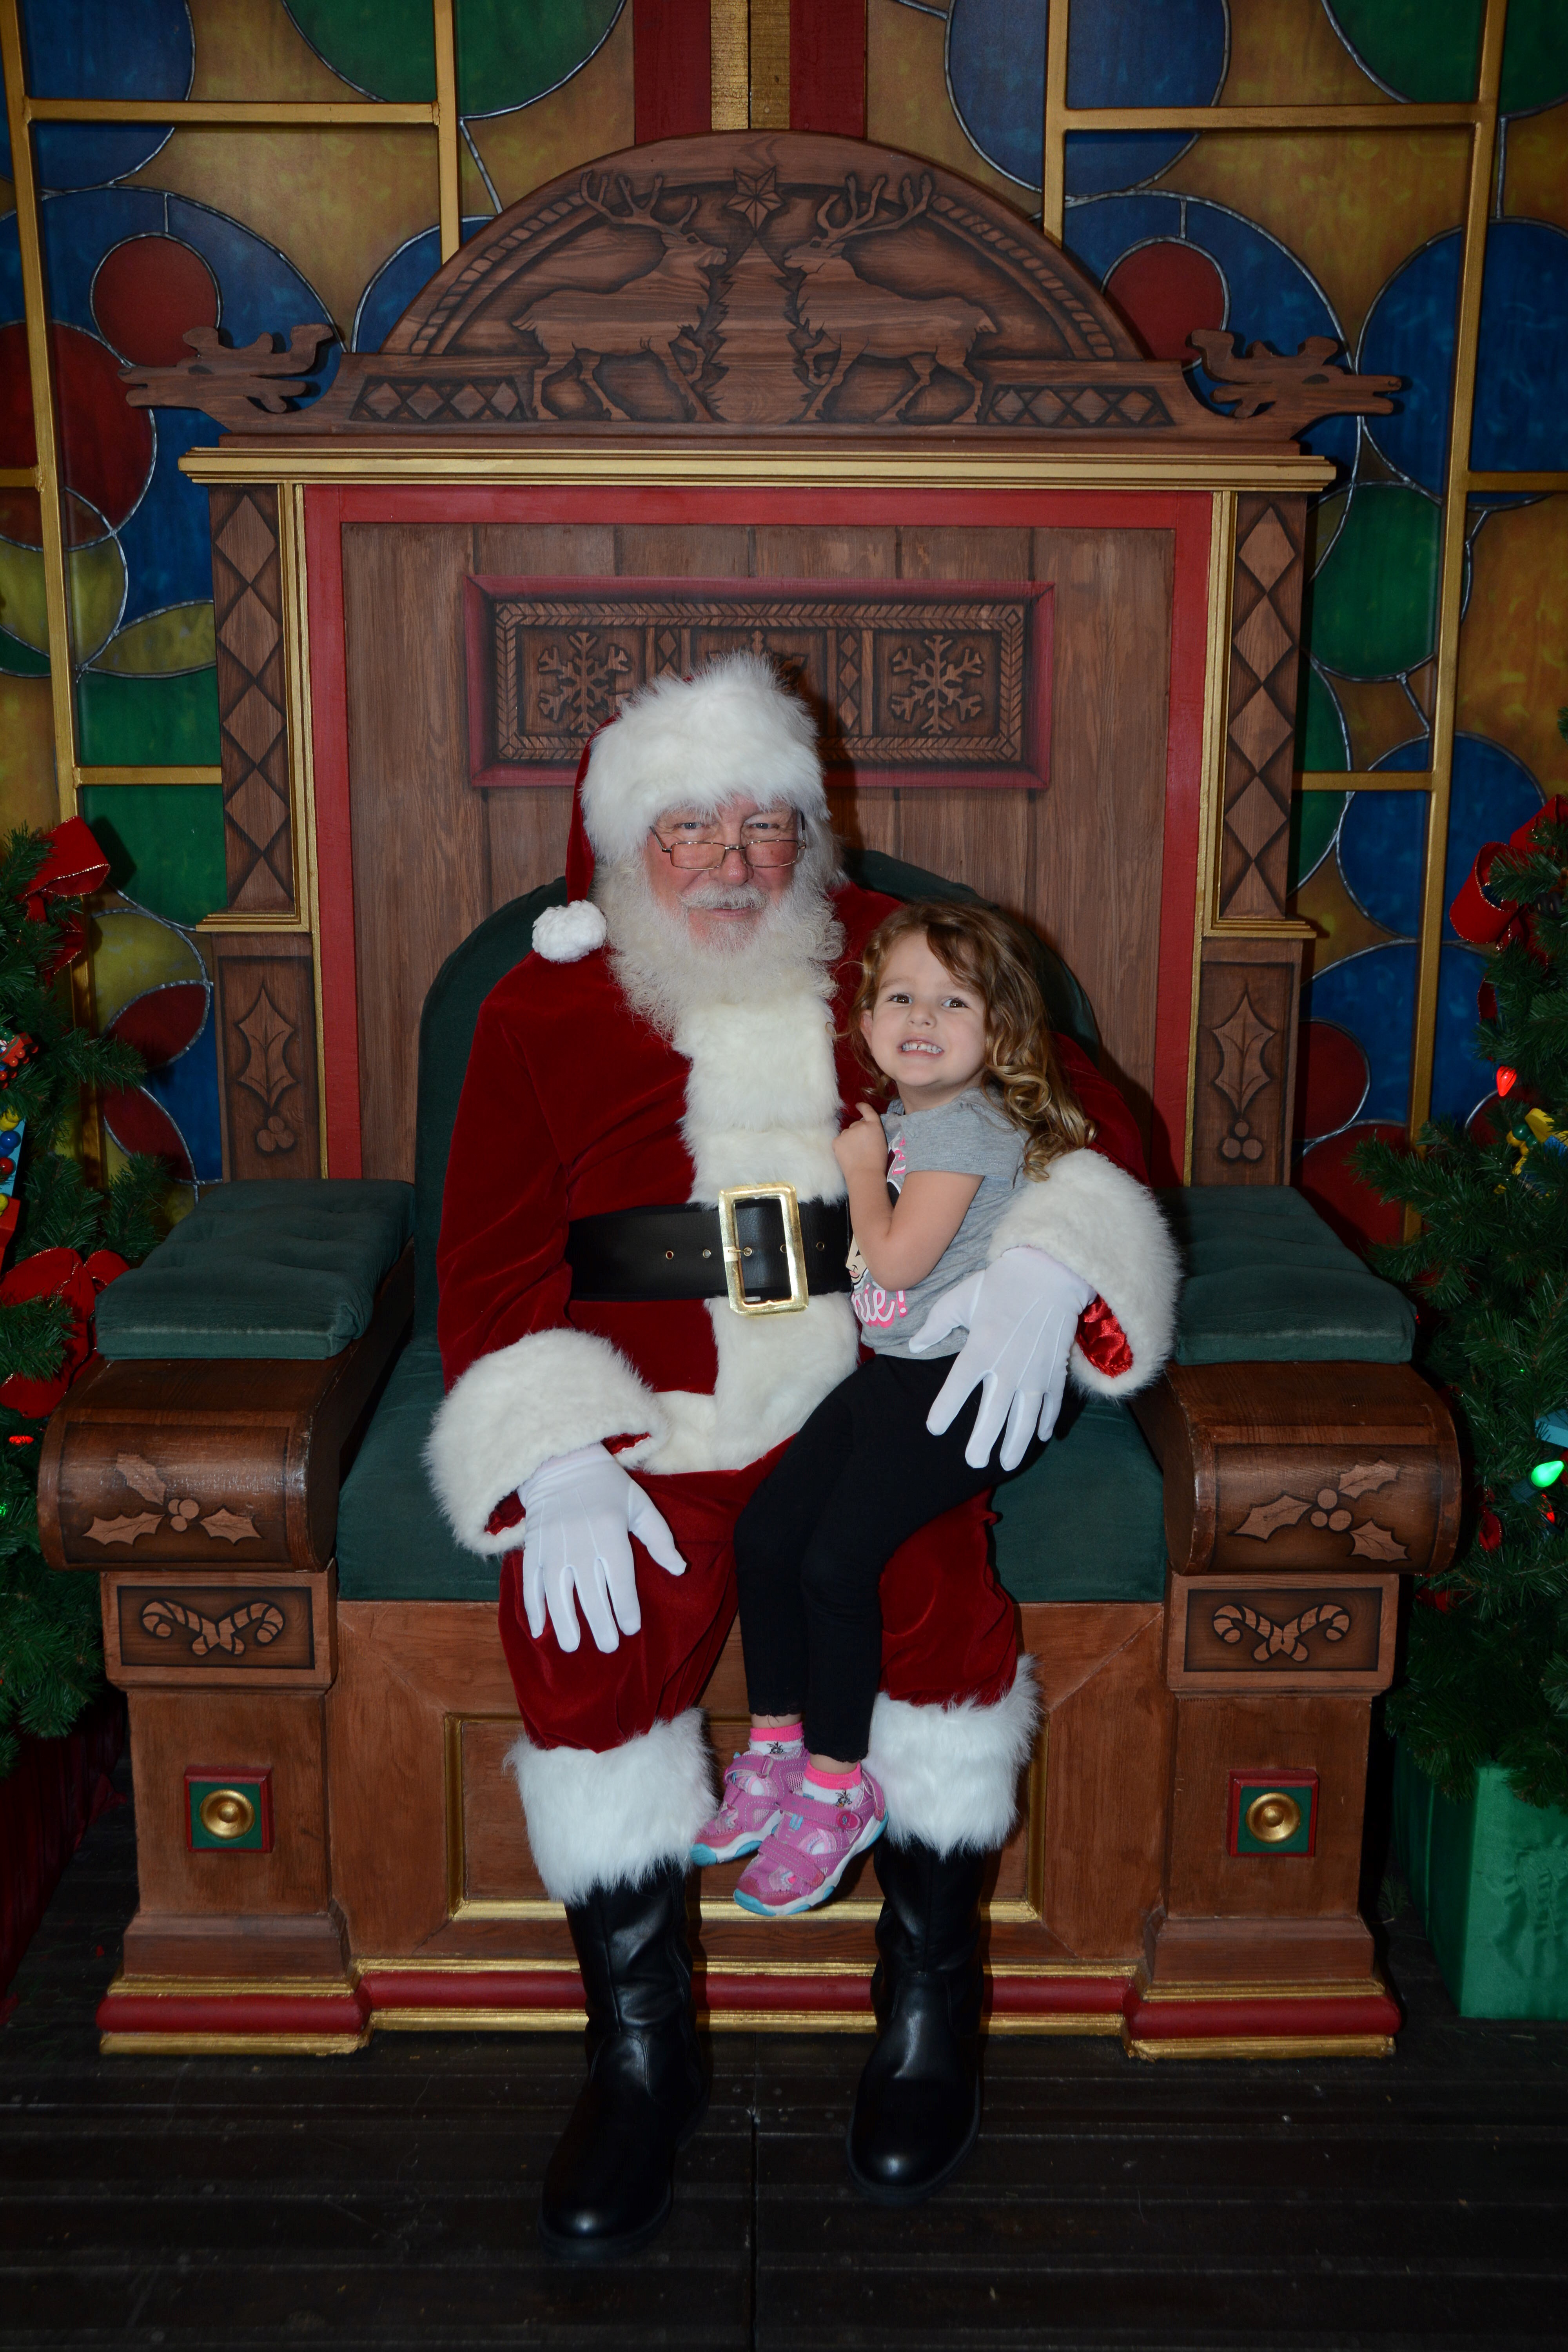 Great visit with Santa!